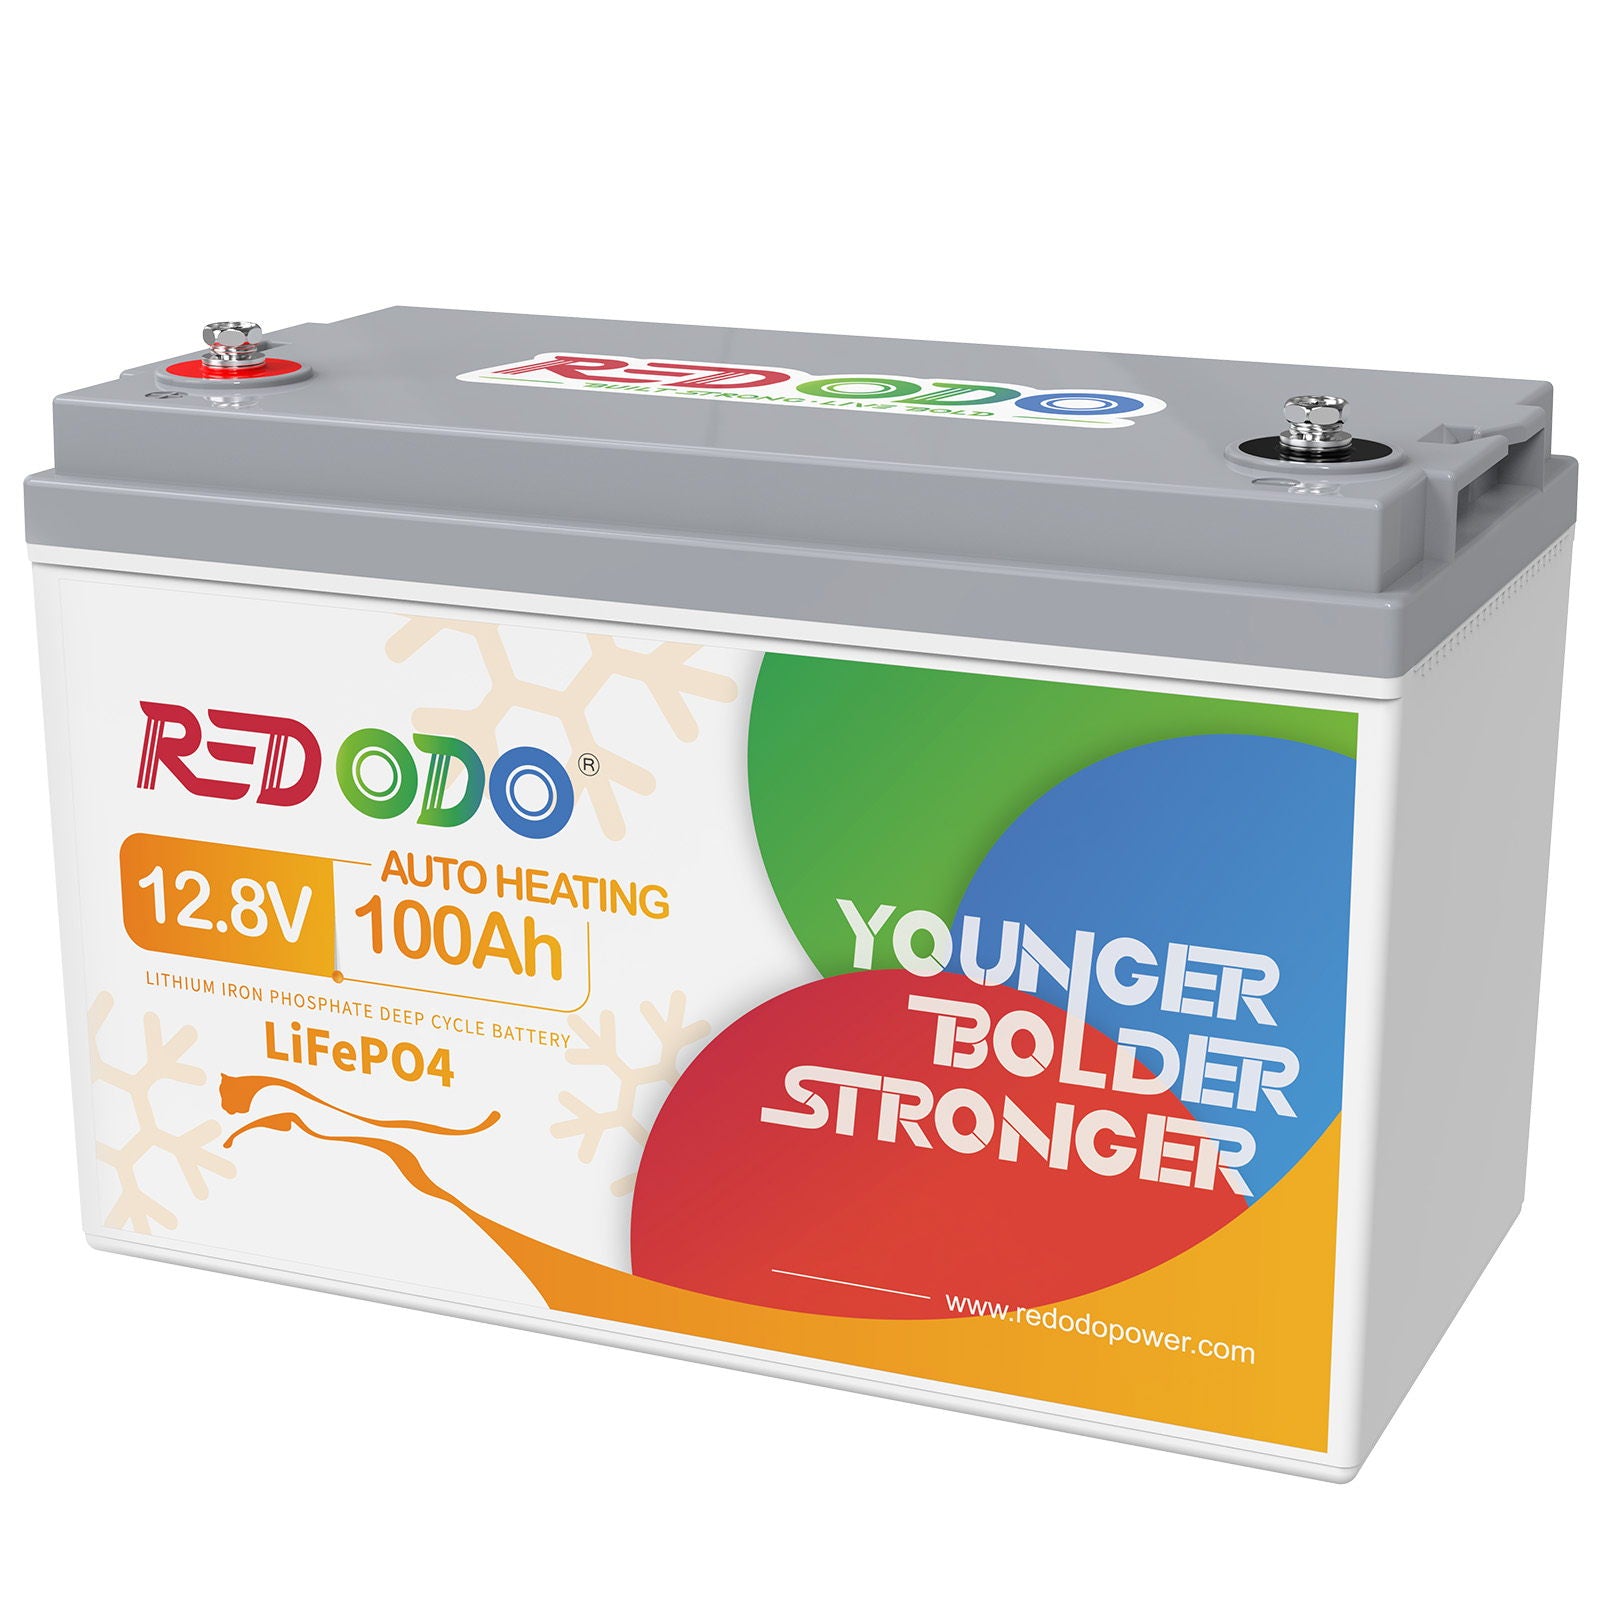 gemak Verhandeling schakelaar Redodo 12V 100Ah LiFePO4 Batterie mit Selbsterwärmung - redodopower-de